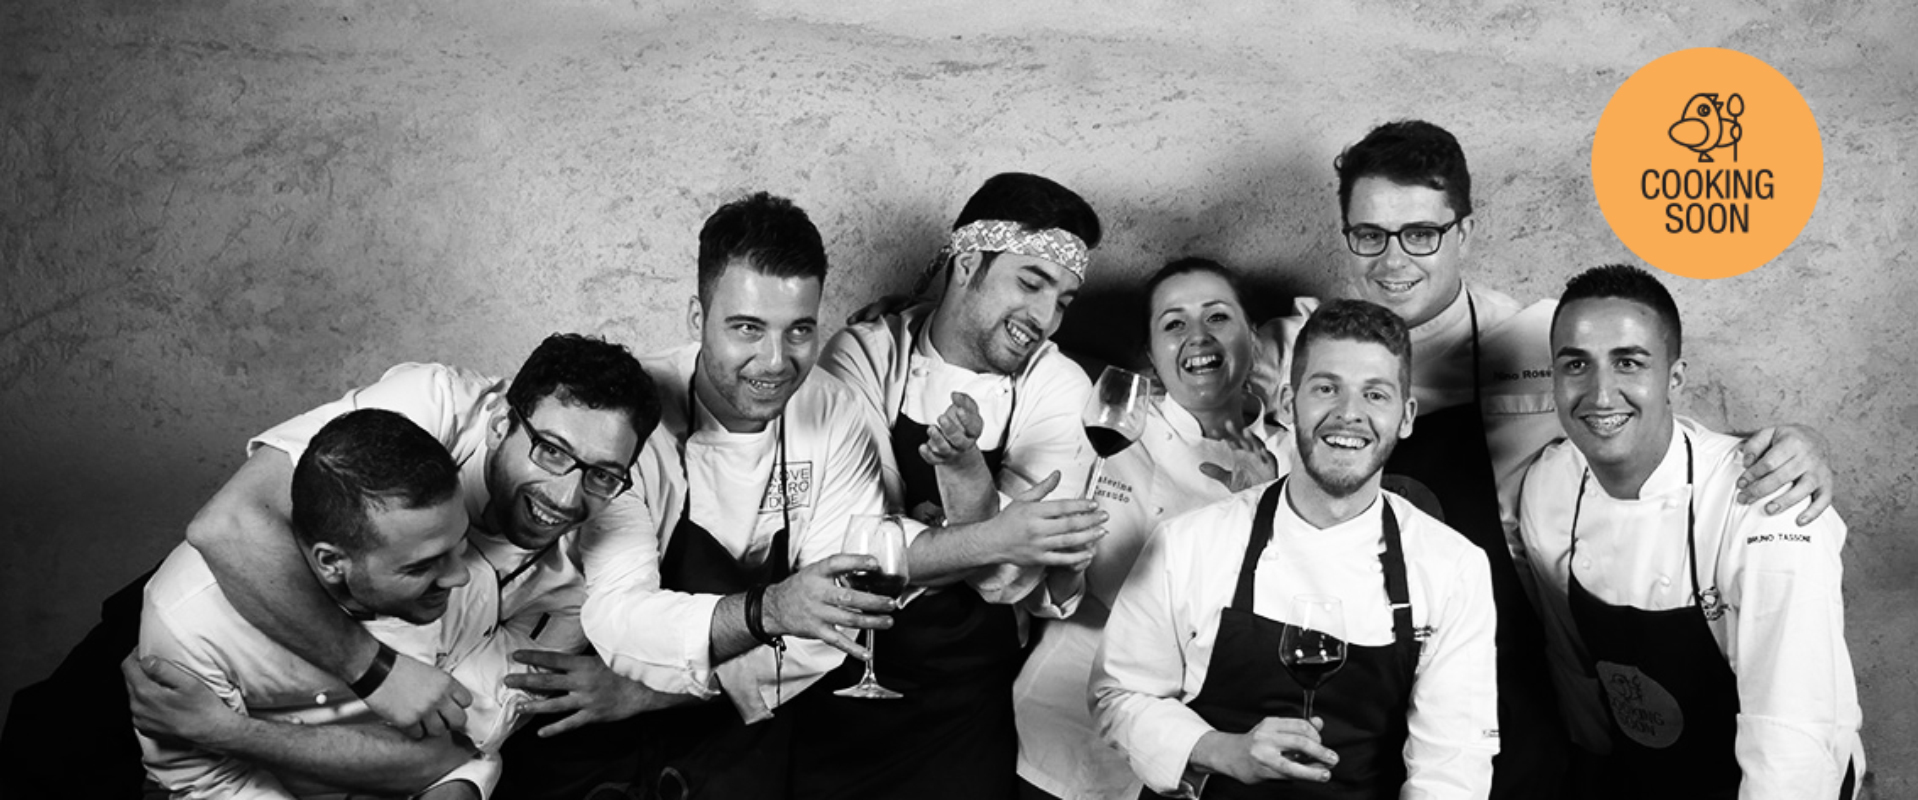 9_cooking-soon-chef_ph-manuela-laiacona